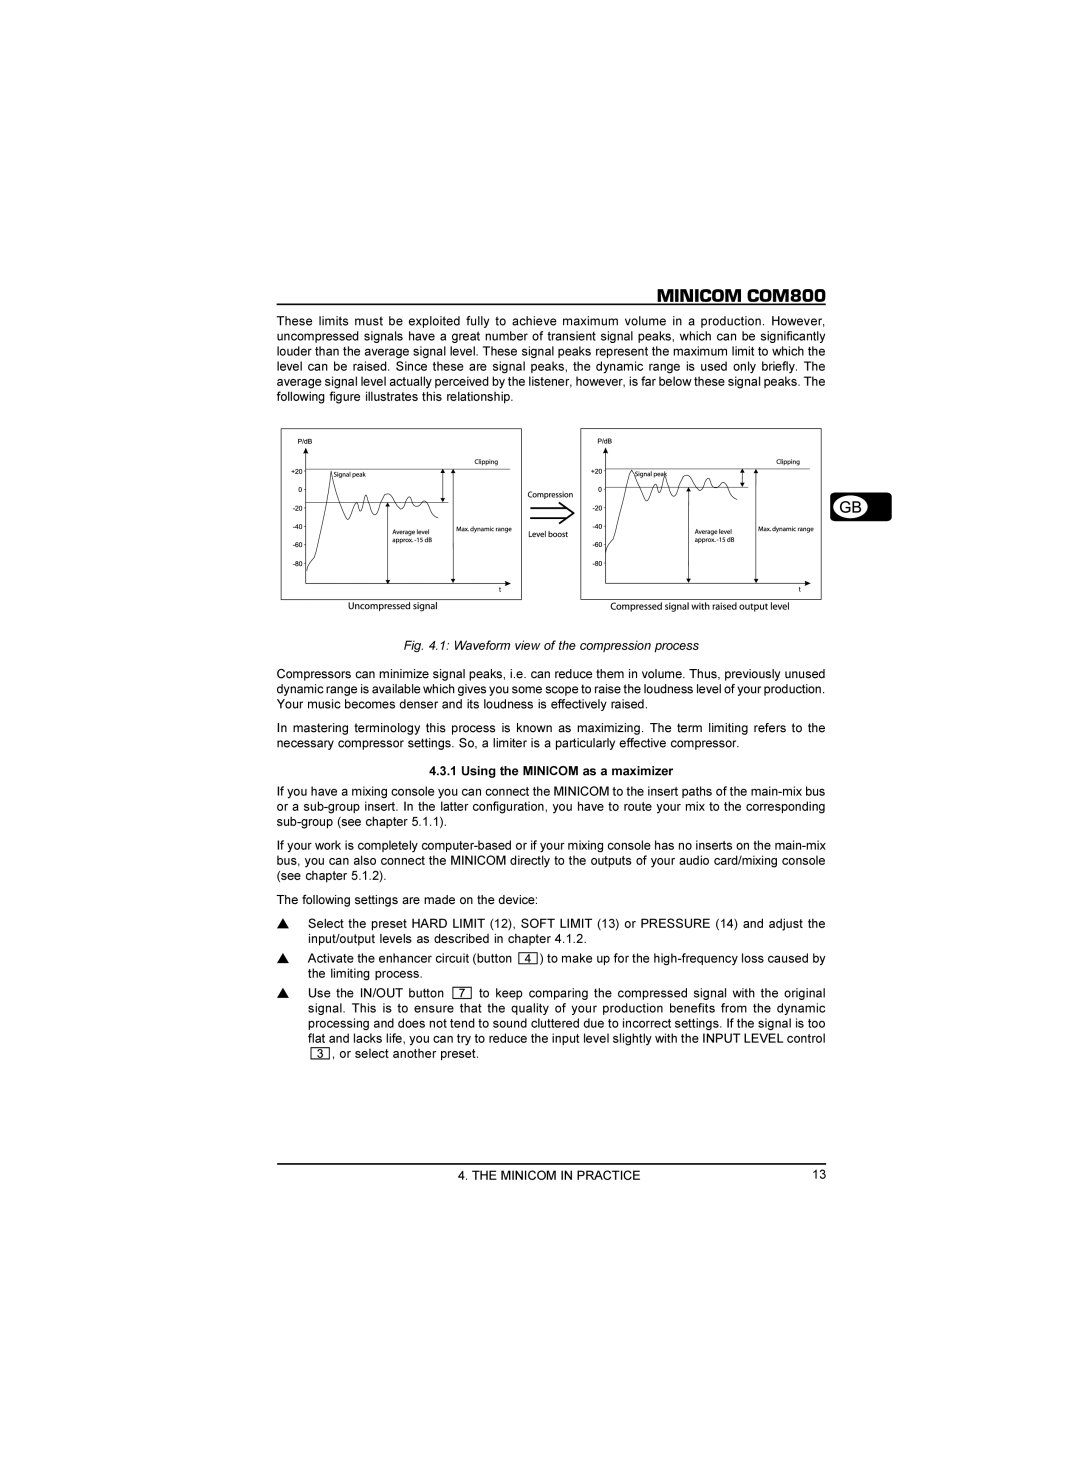 Behringer manual MINICOM COM800, 1 Waveform view of the compression process 